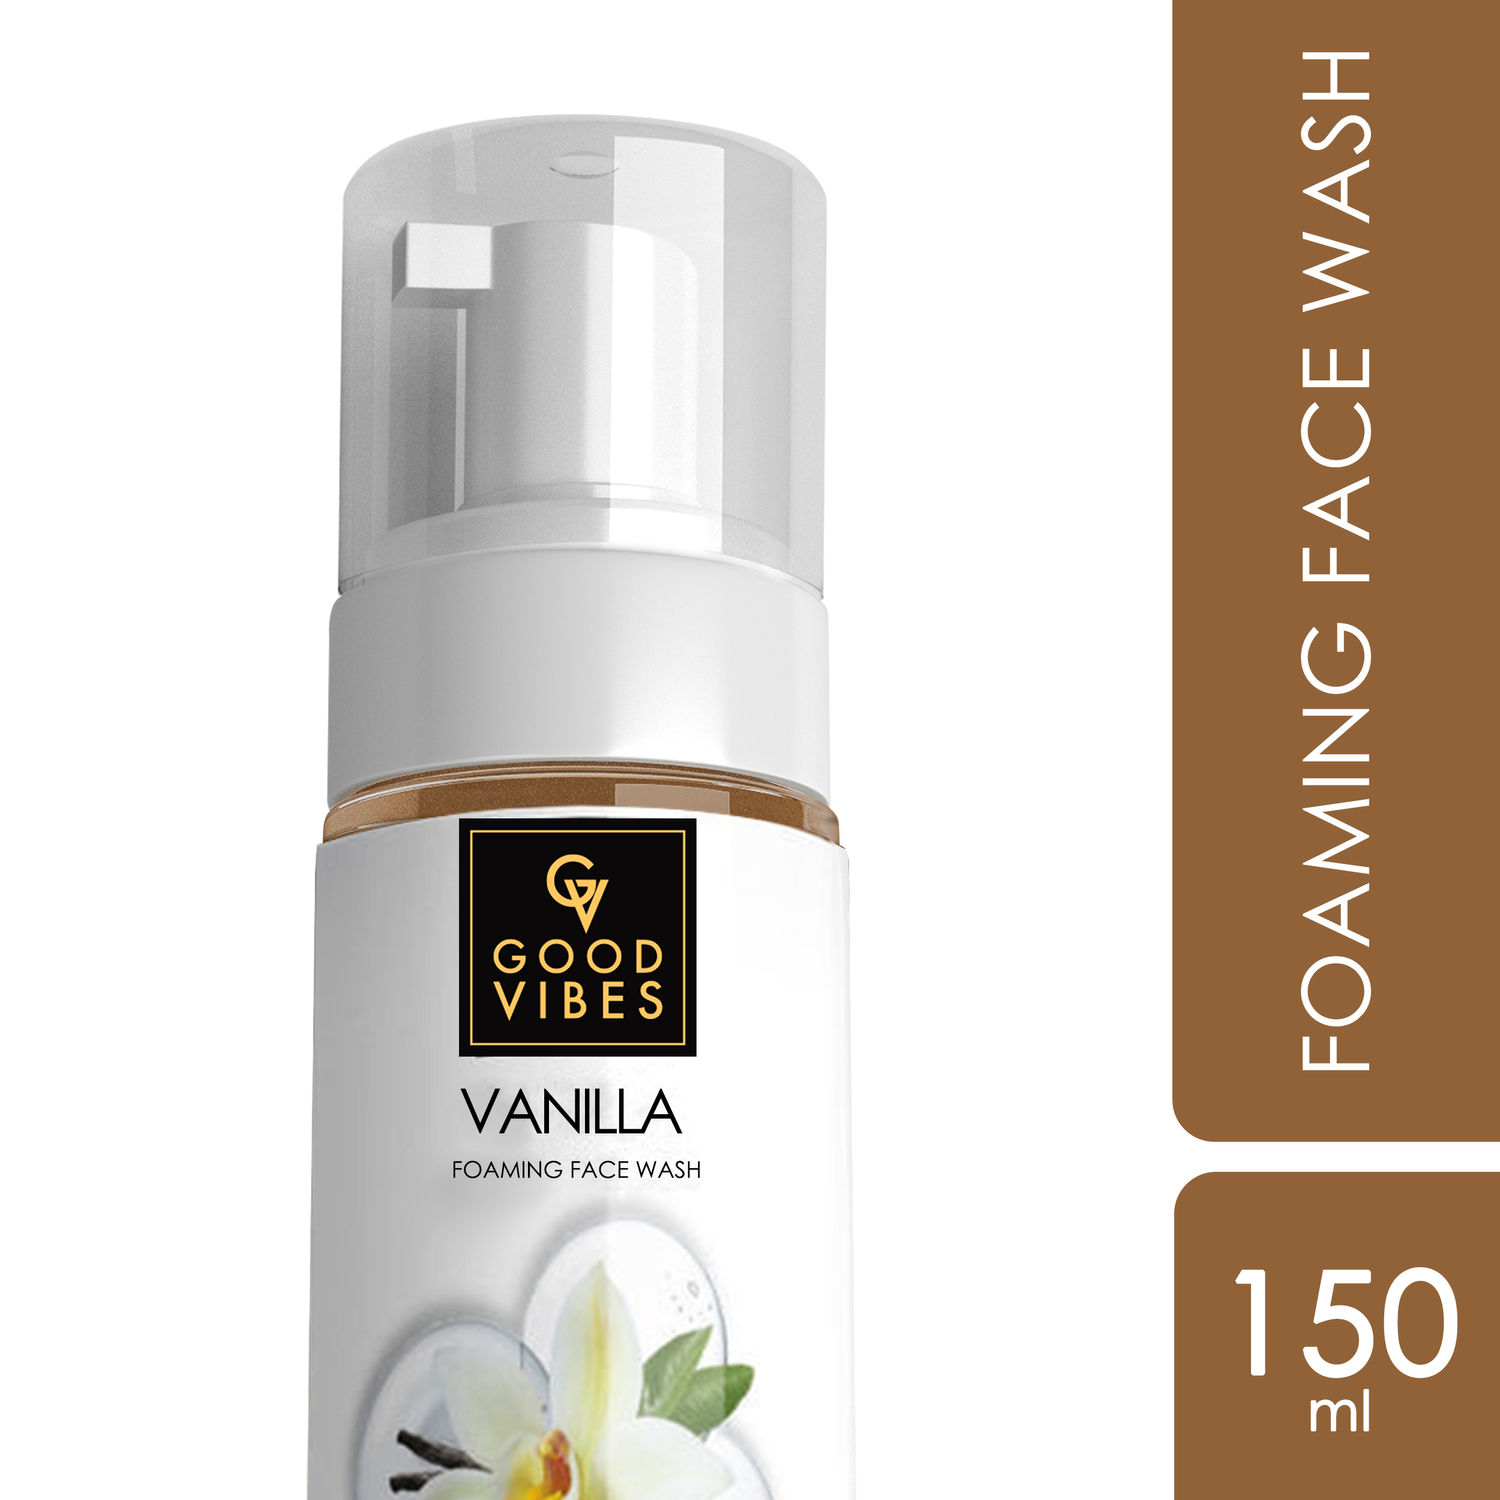 Buy Good Vibes Foaming Face Wash - Vanilla (150 ml) - Purplle